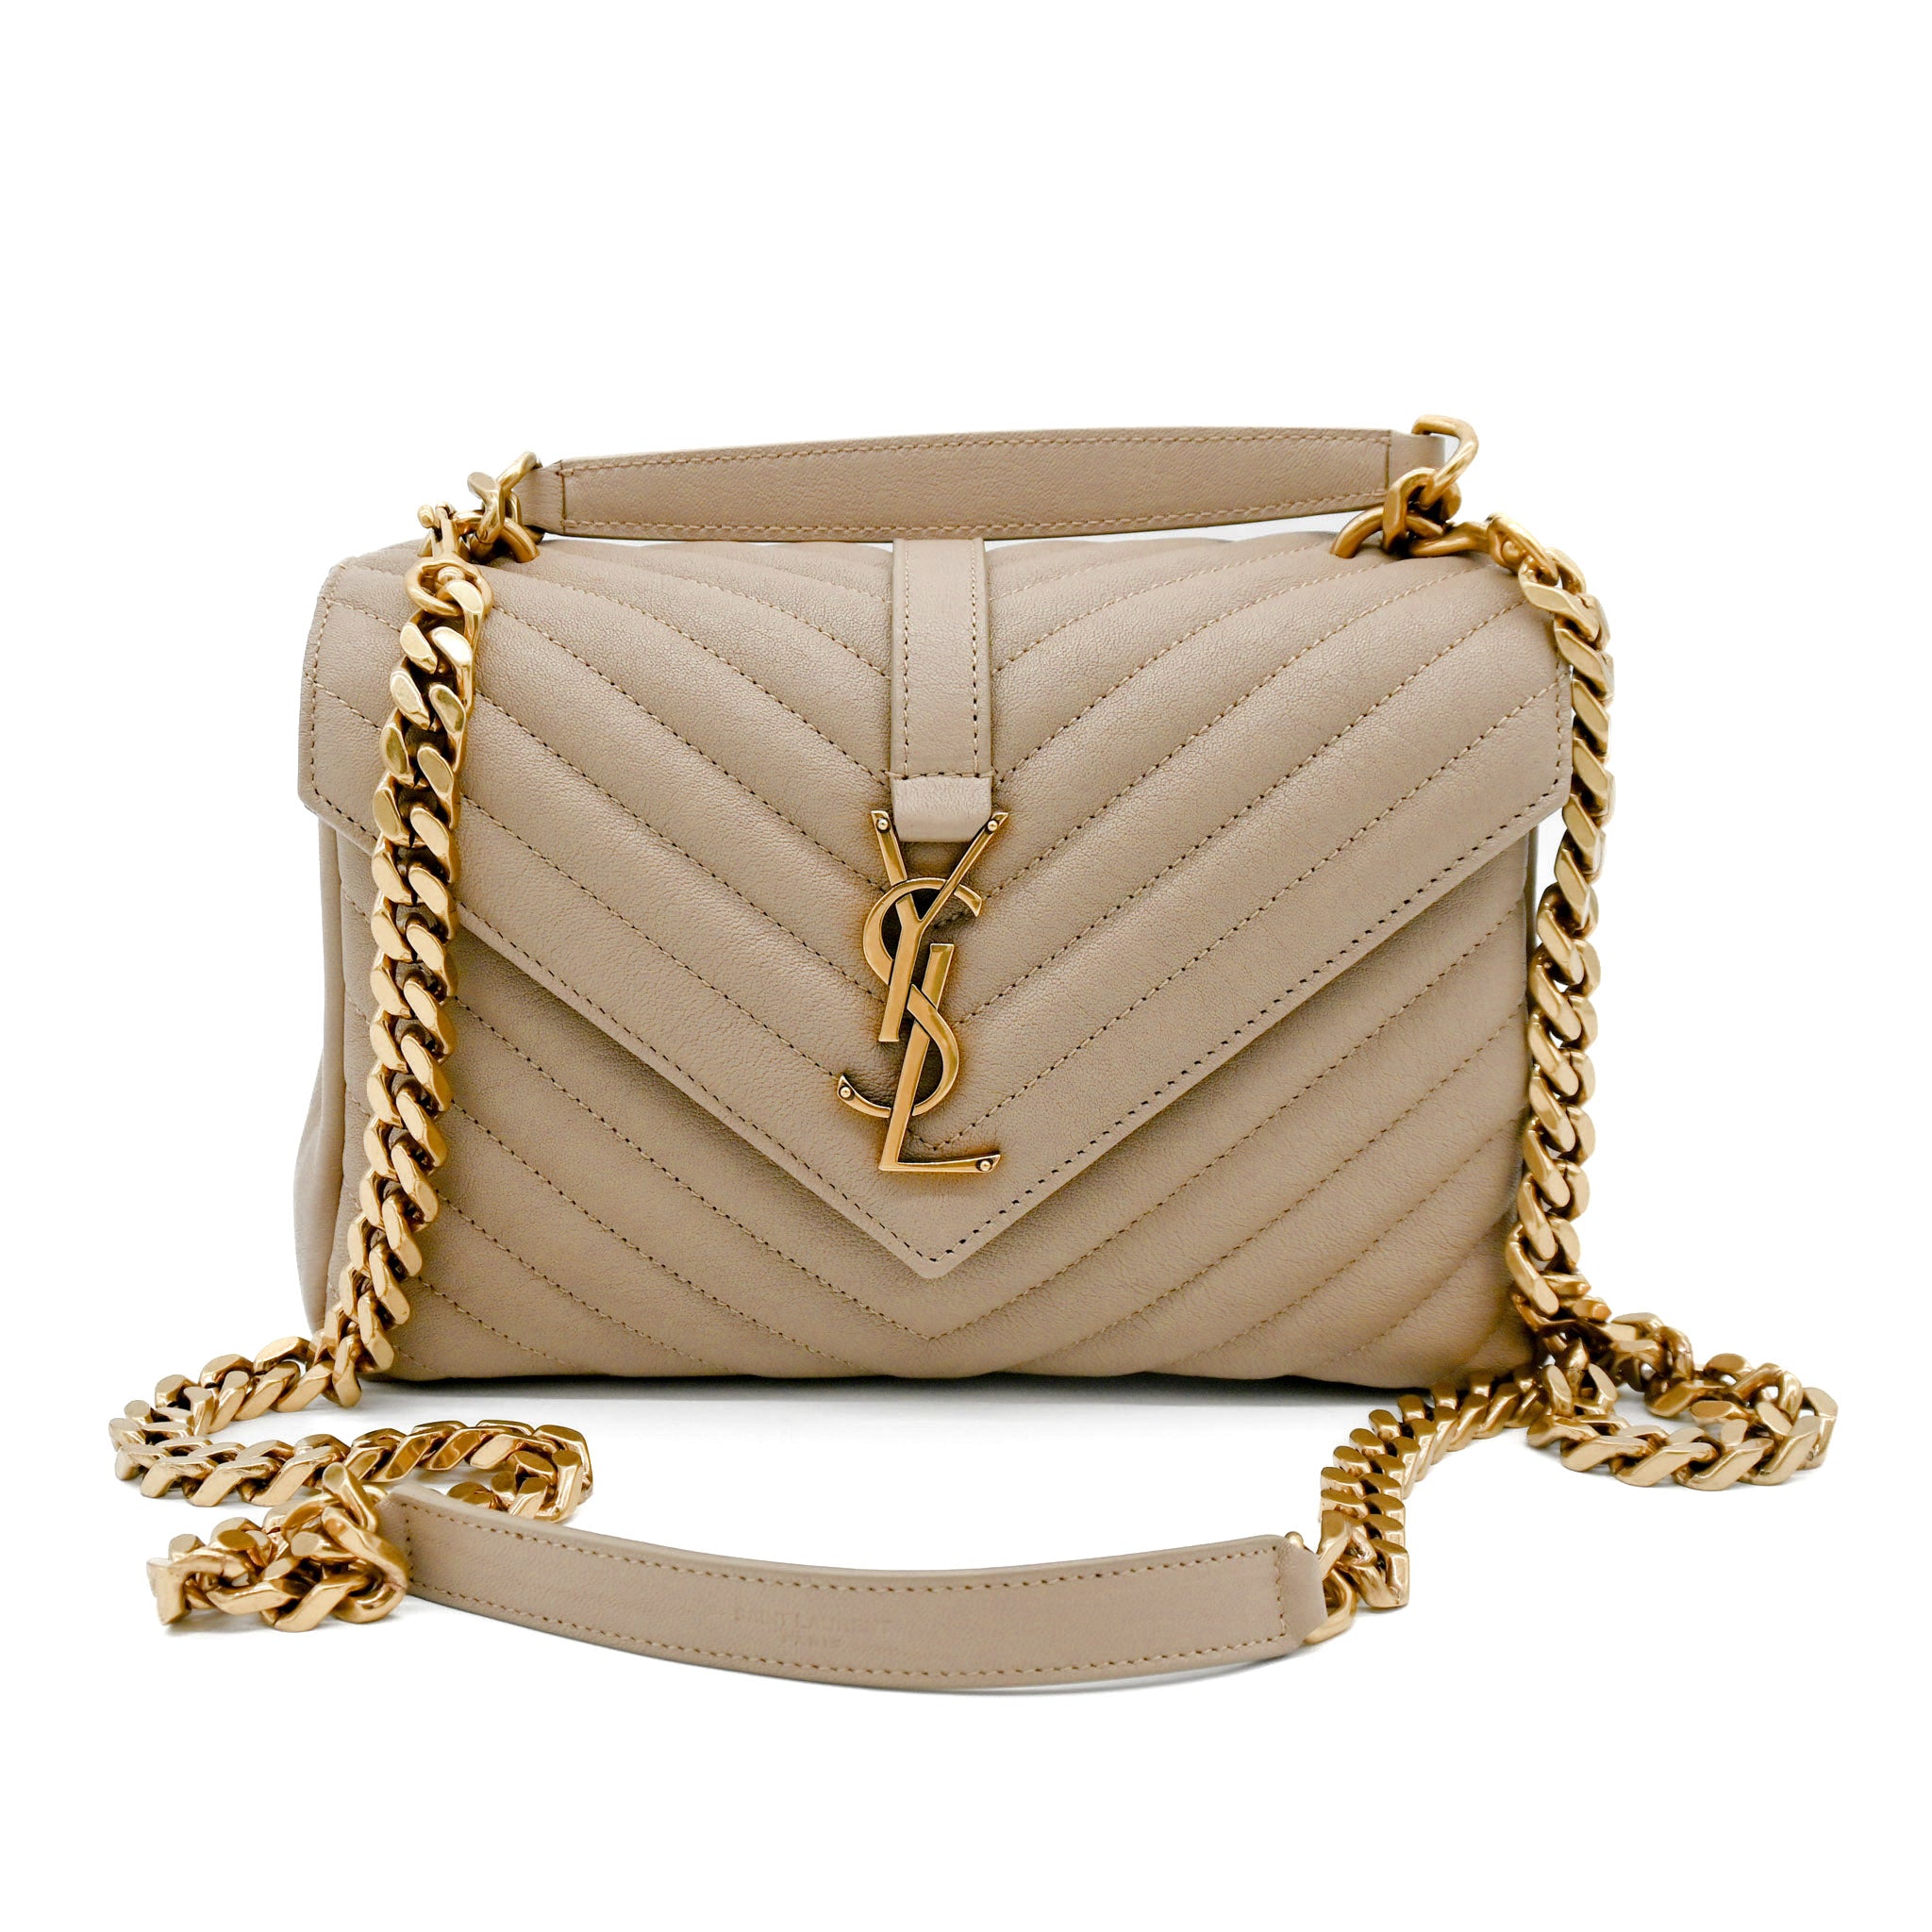 Saint Laurent Medium College Satchel Dark Beige with Gold Hardware - Vault 55 | Preowned Designer Handbags